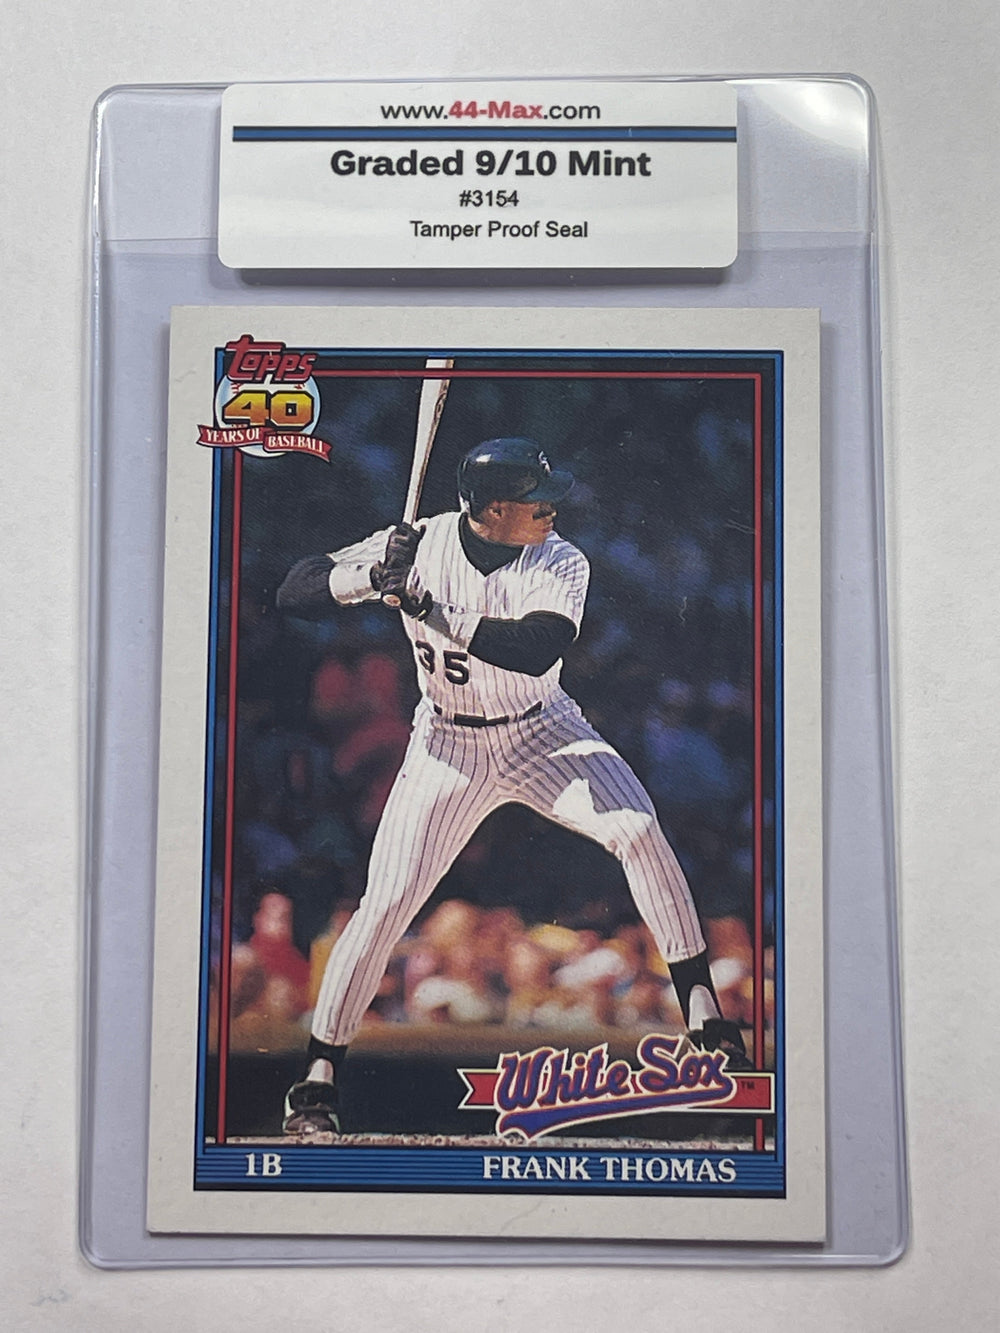 Frank Thomas 1991 Topps Baseball Card. 44-Max 9/10 MINT #3154